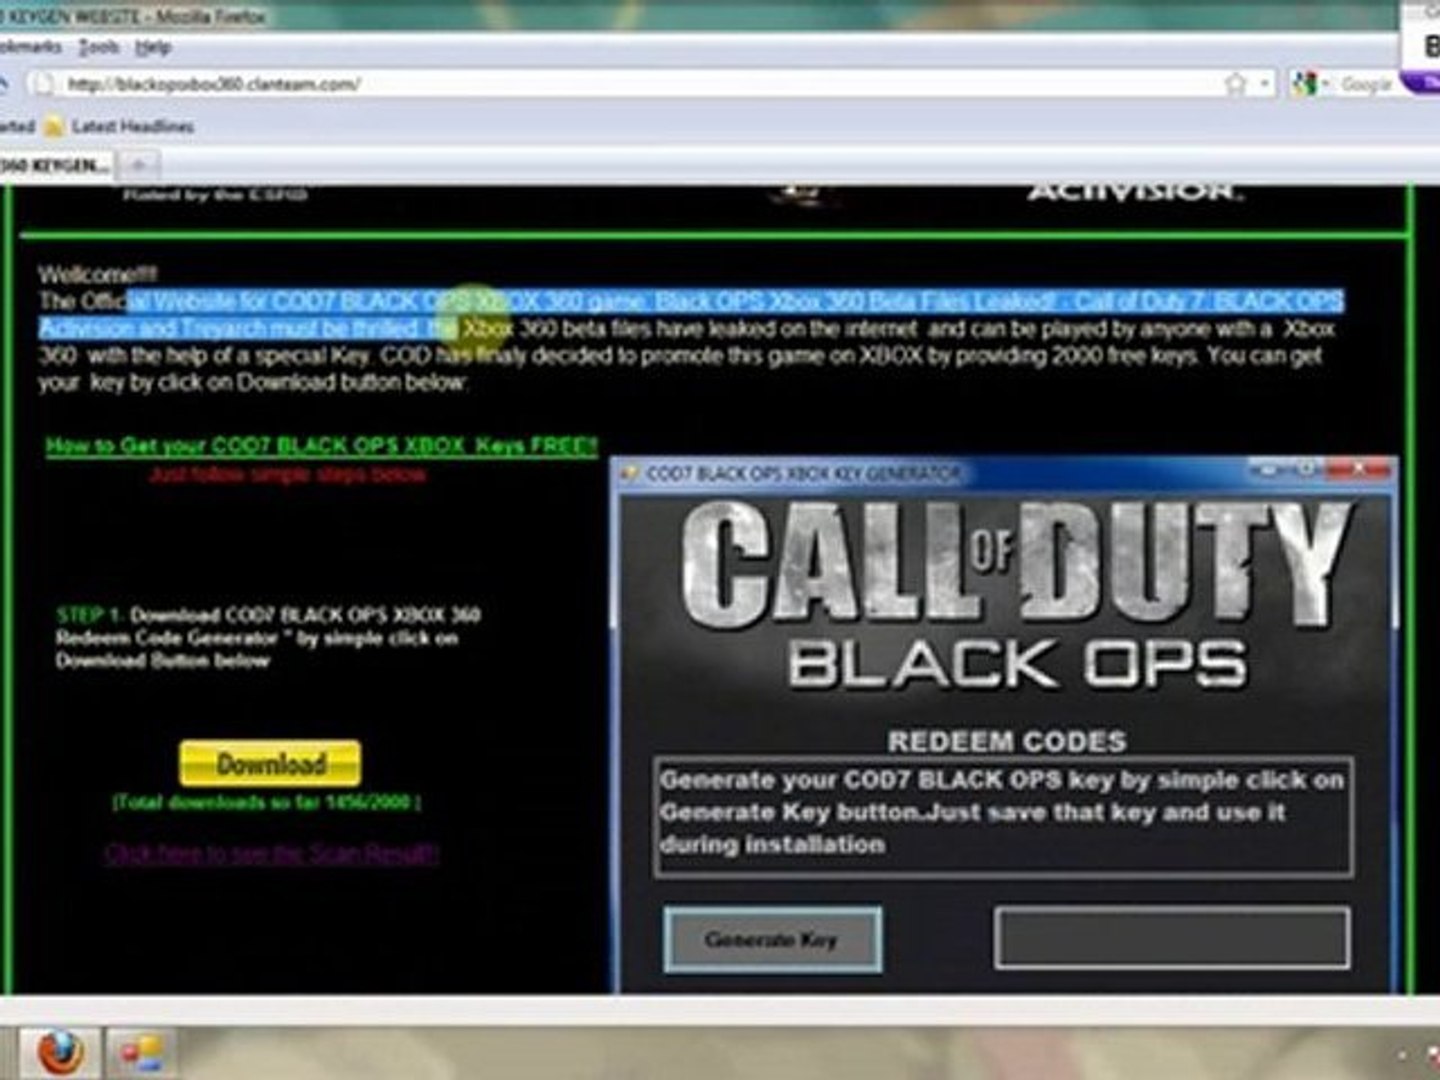 Free black ops xbox 360 code generator - video Dailymotion